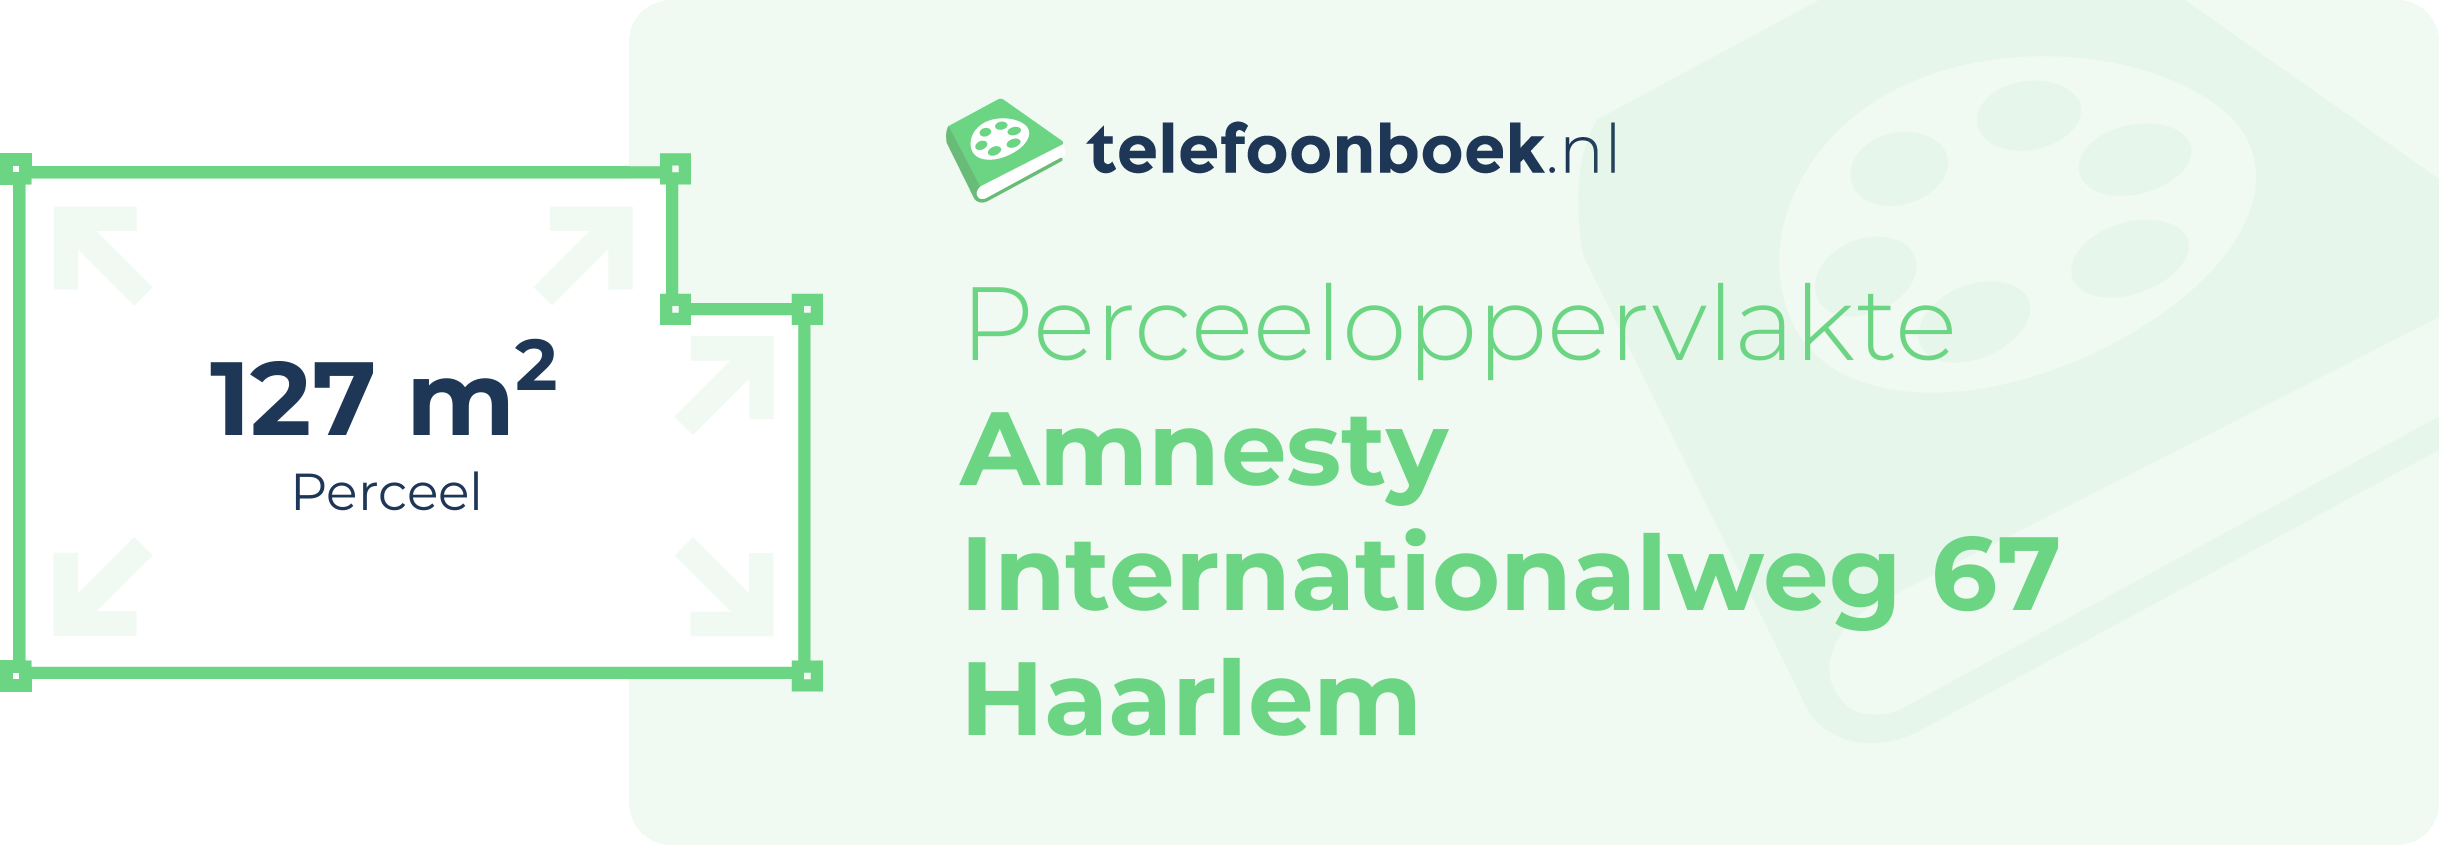 Perceeloppervlakte Amnesty Internationalweg 67 Haarlem